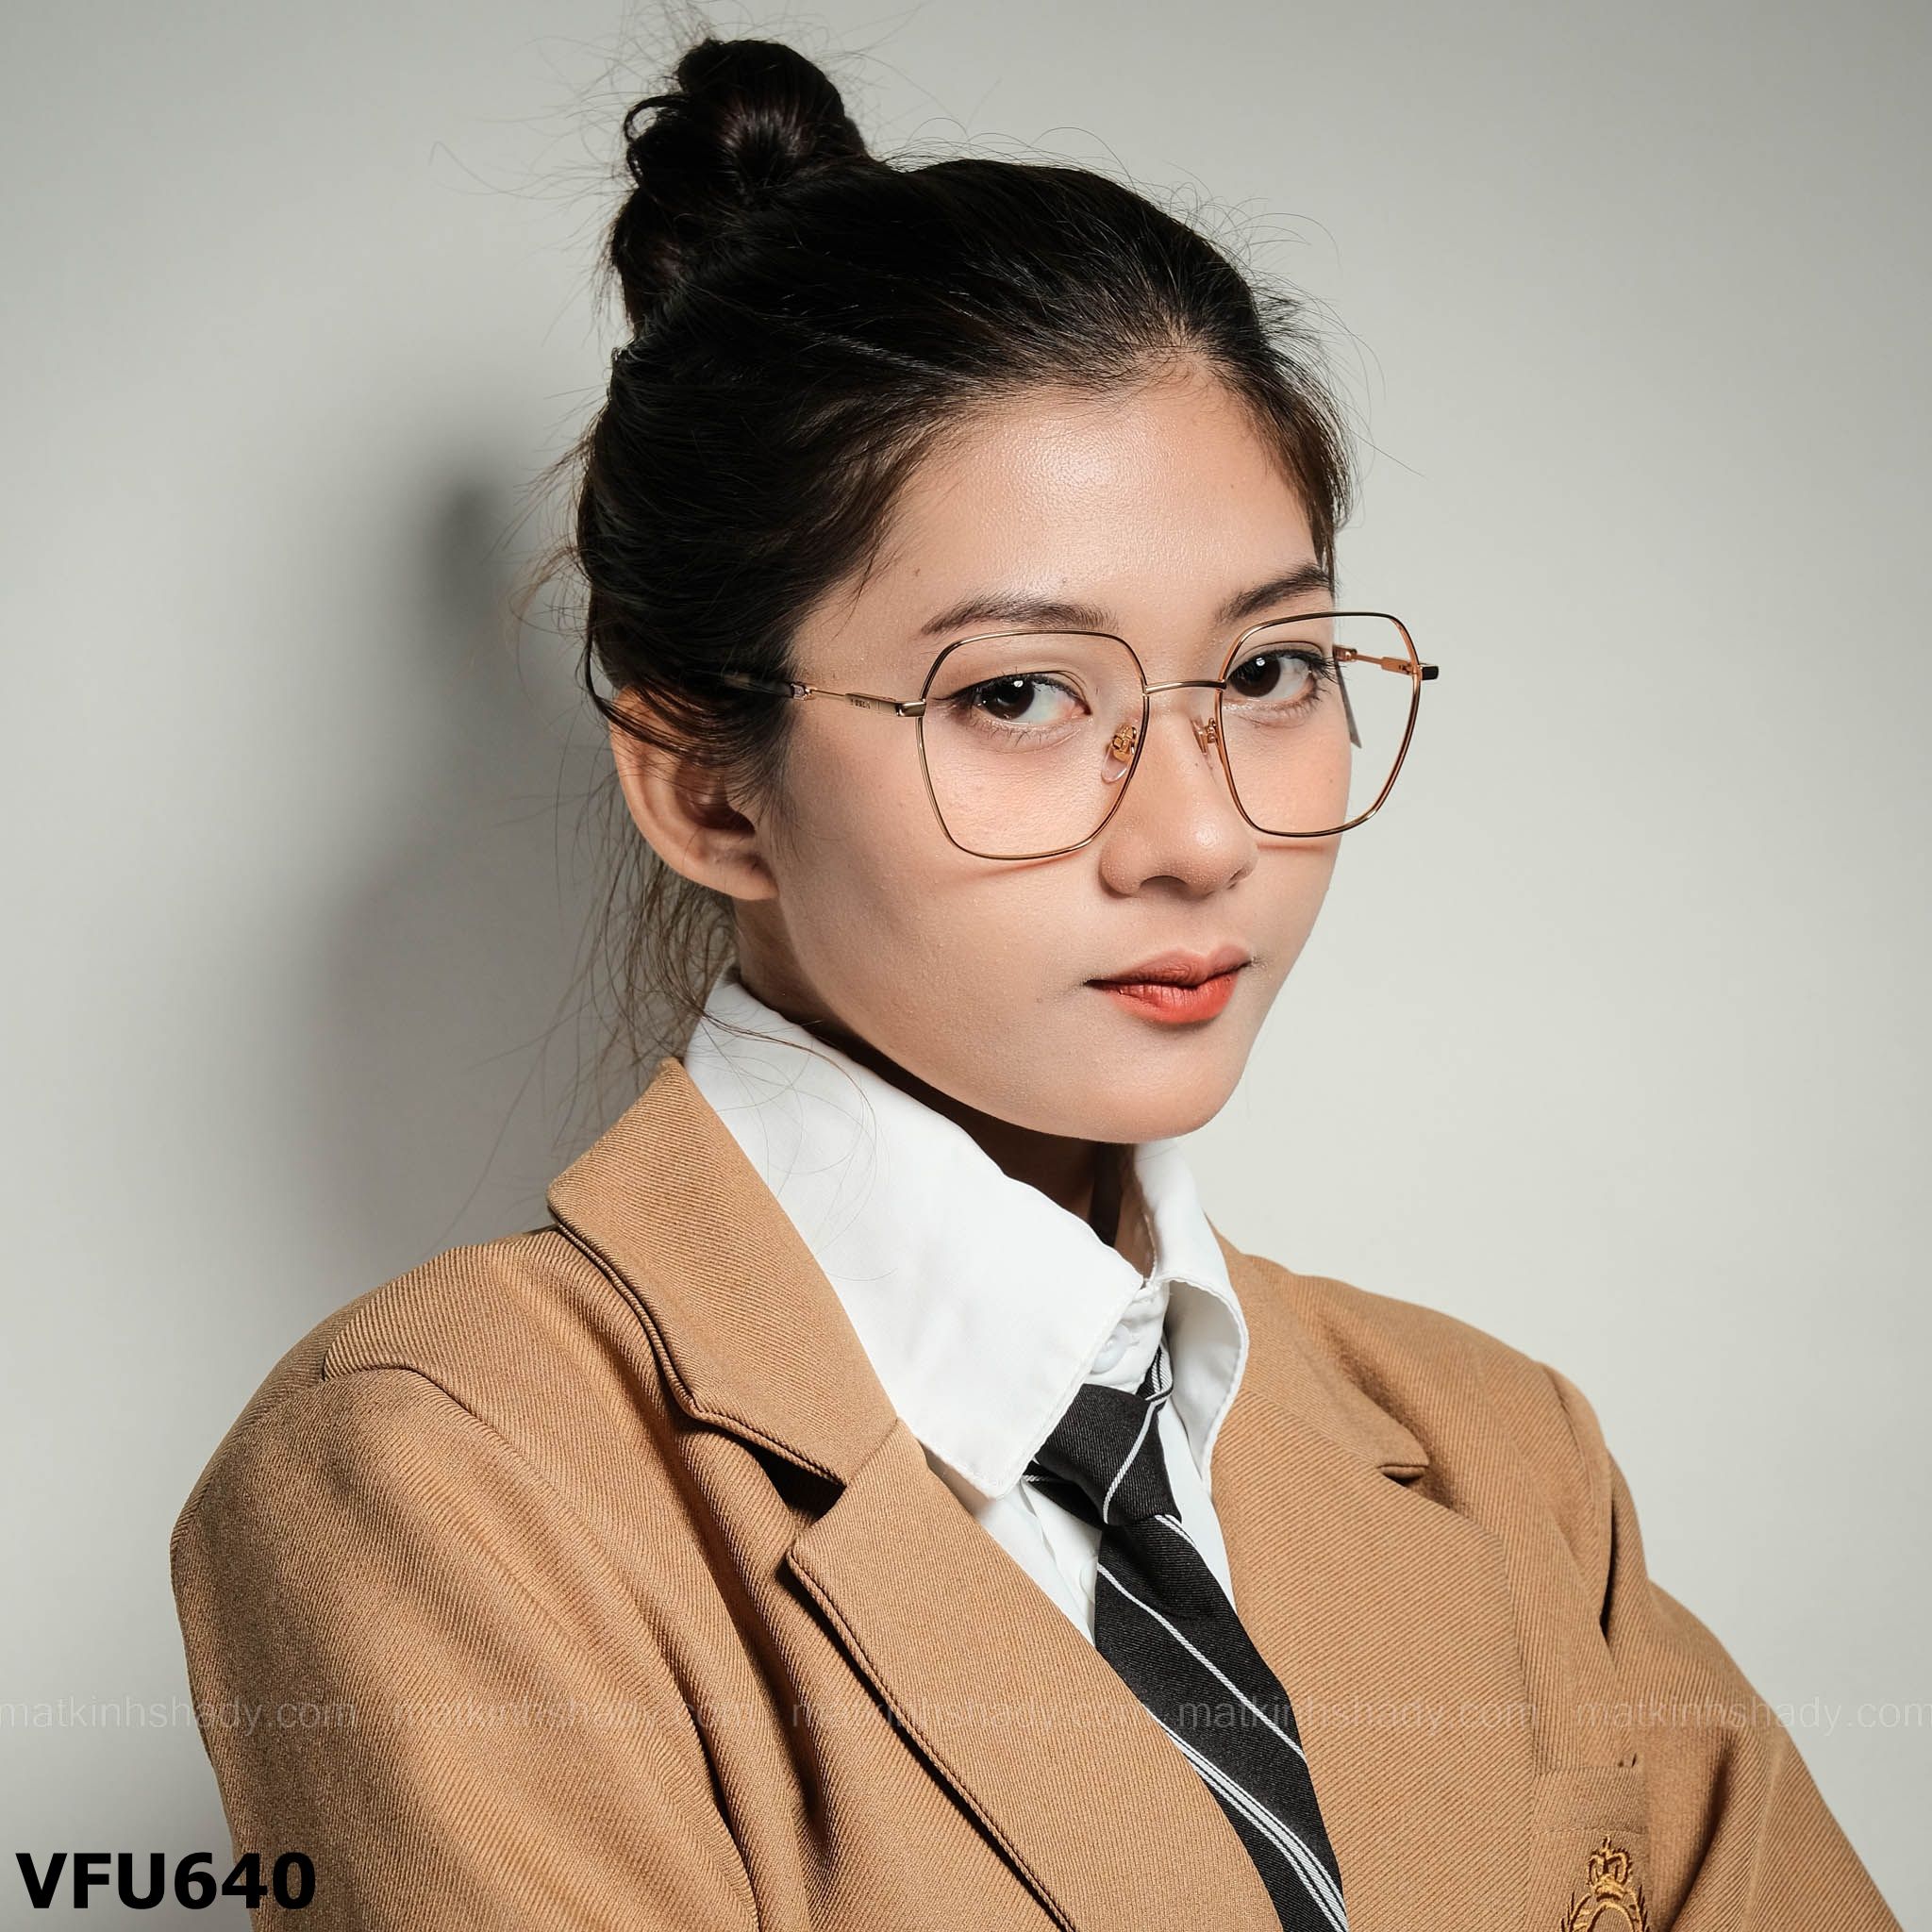  Furla Eyewear - Glasses - VFU640 